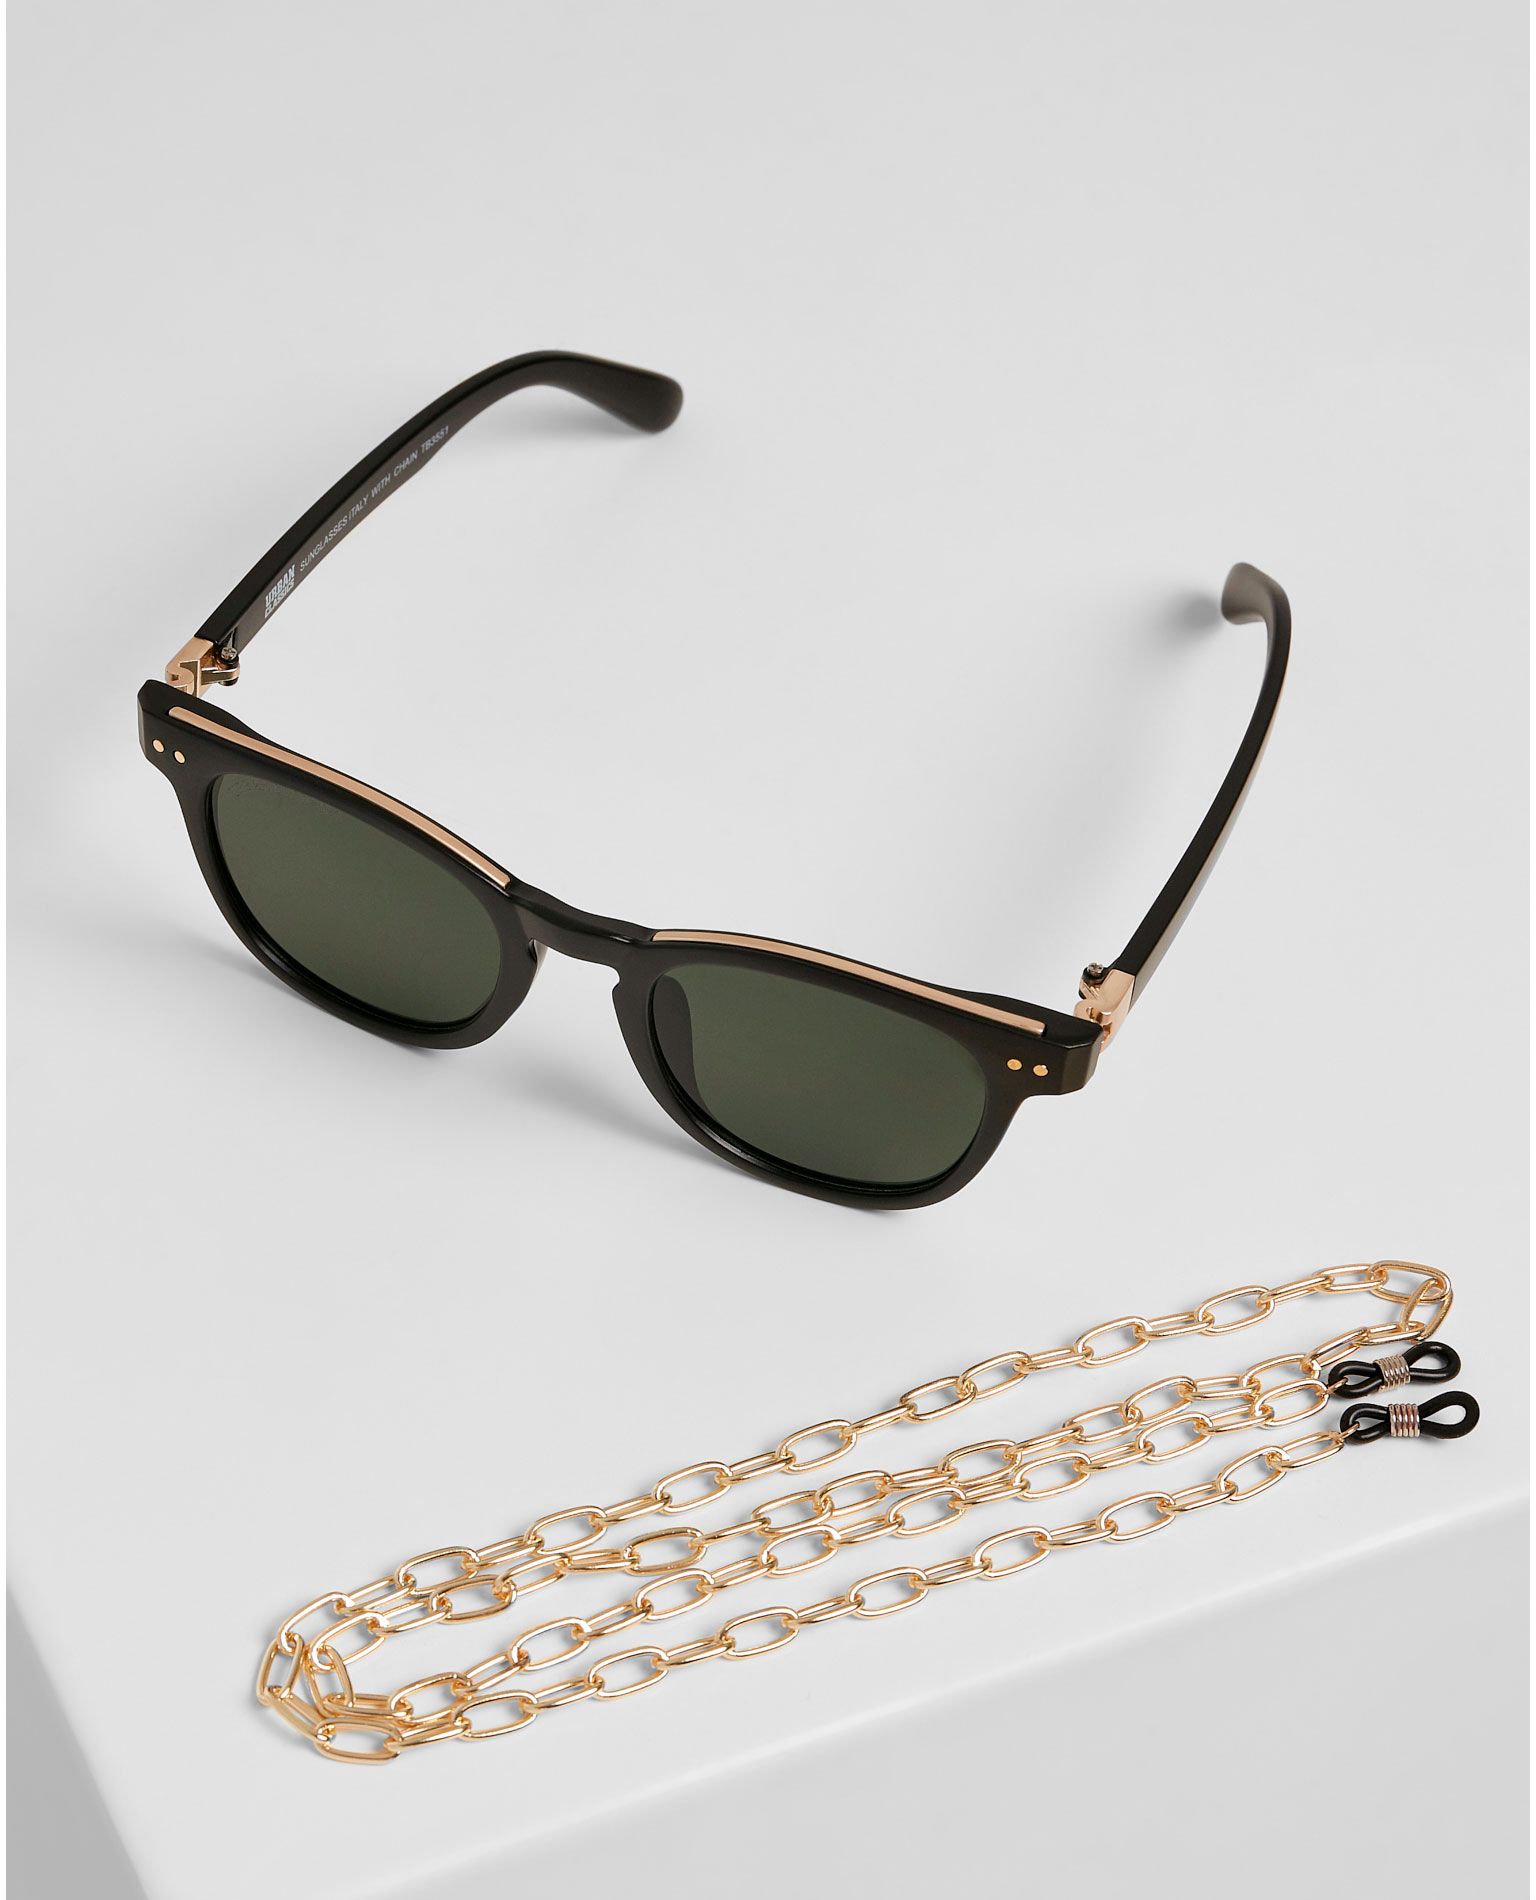 Chain With Urban Italy Sunglasses Classics